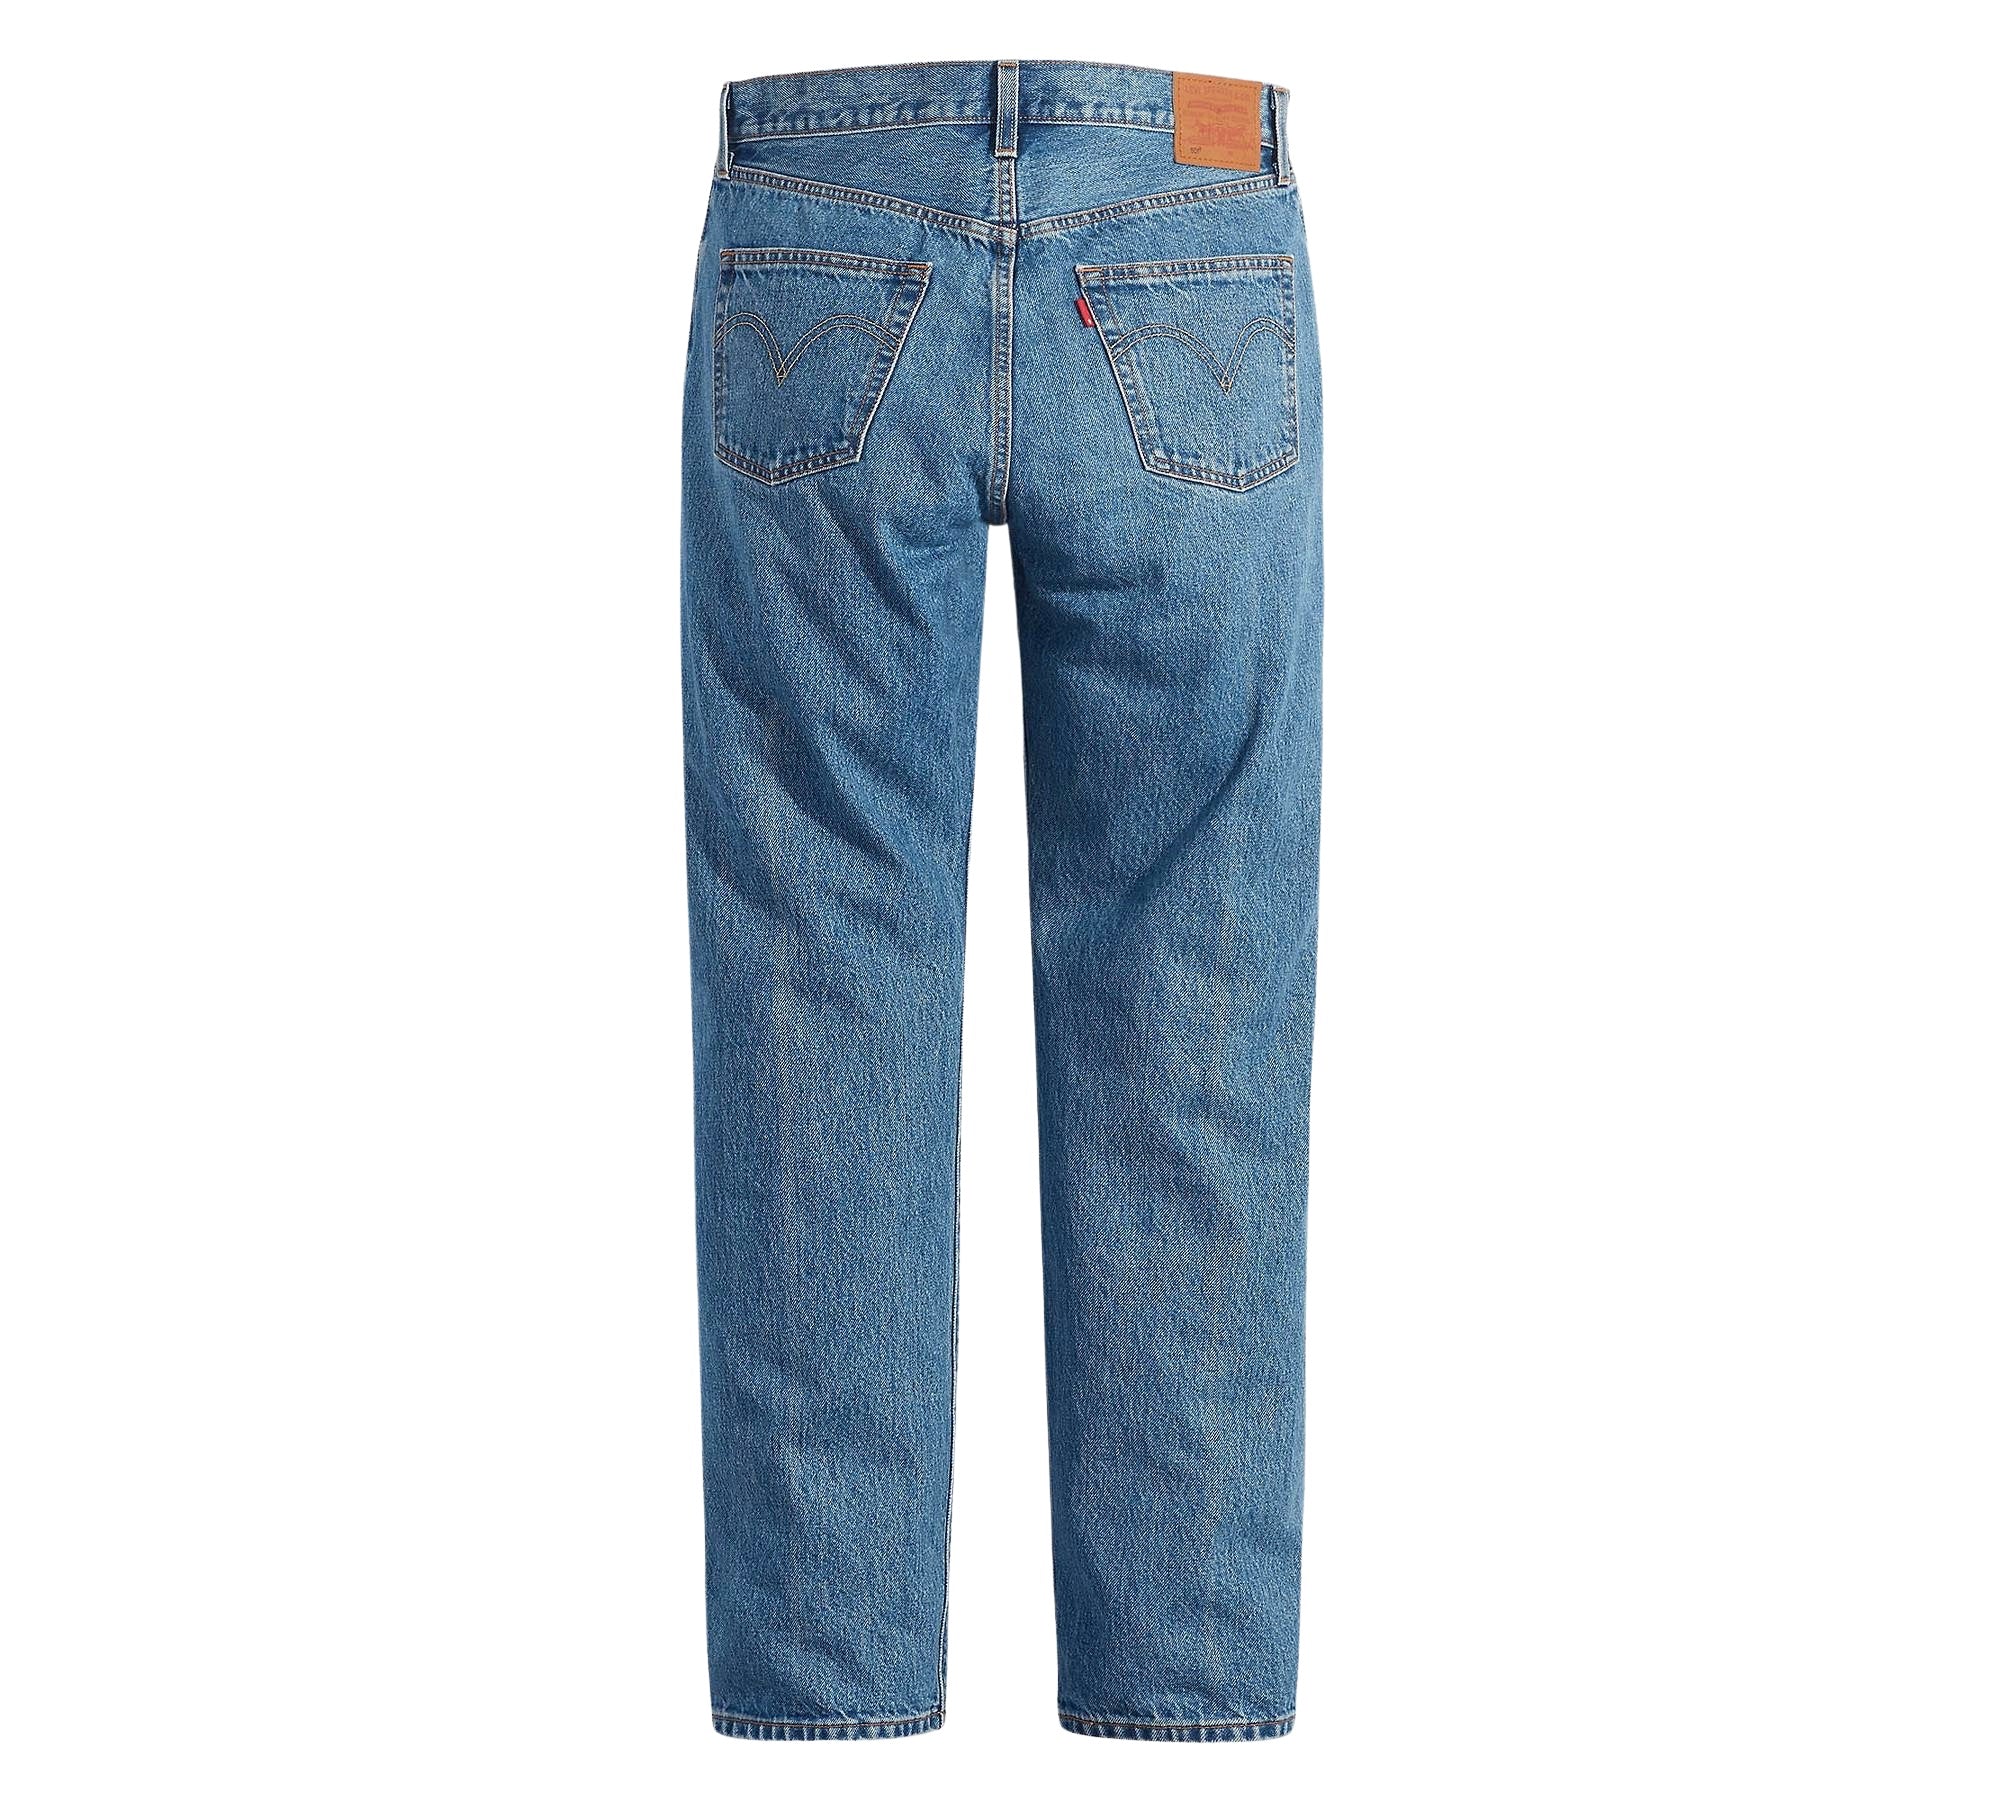 4 Pack - Vintage LEVI'S Classic Blue Zip Fly Jeans - Waist 30 - Length 32 - Vintage Superstore Online